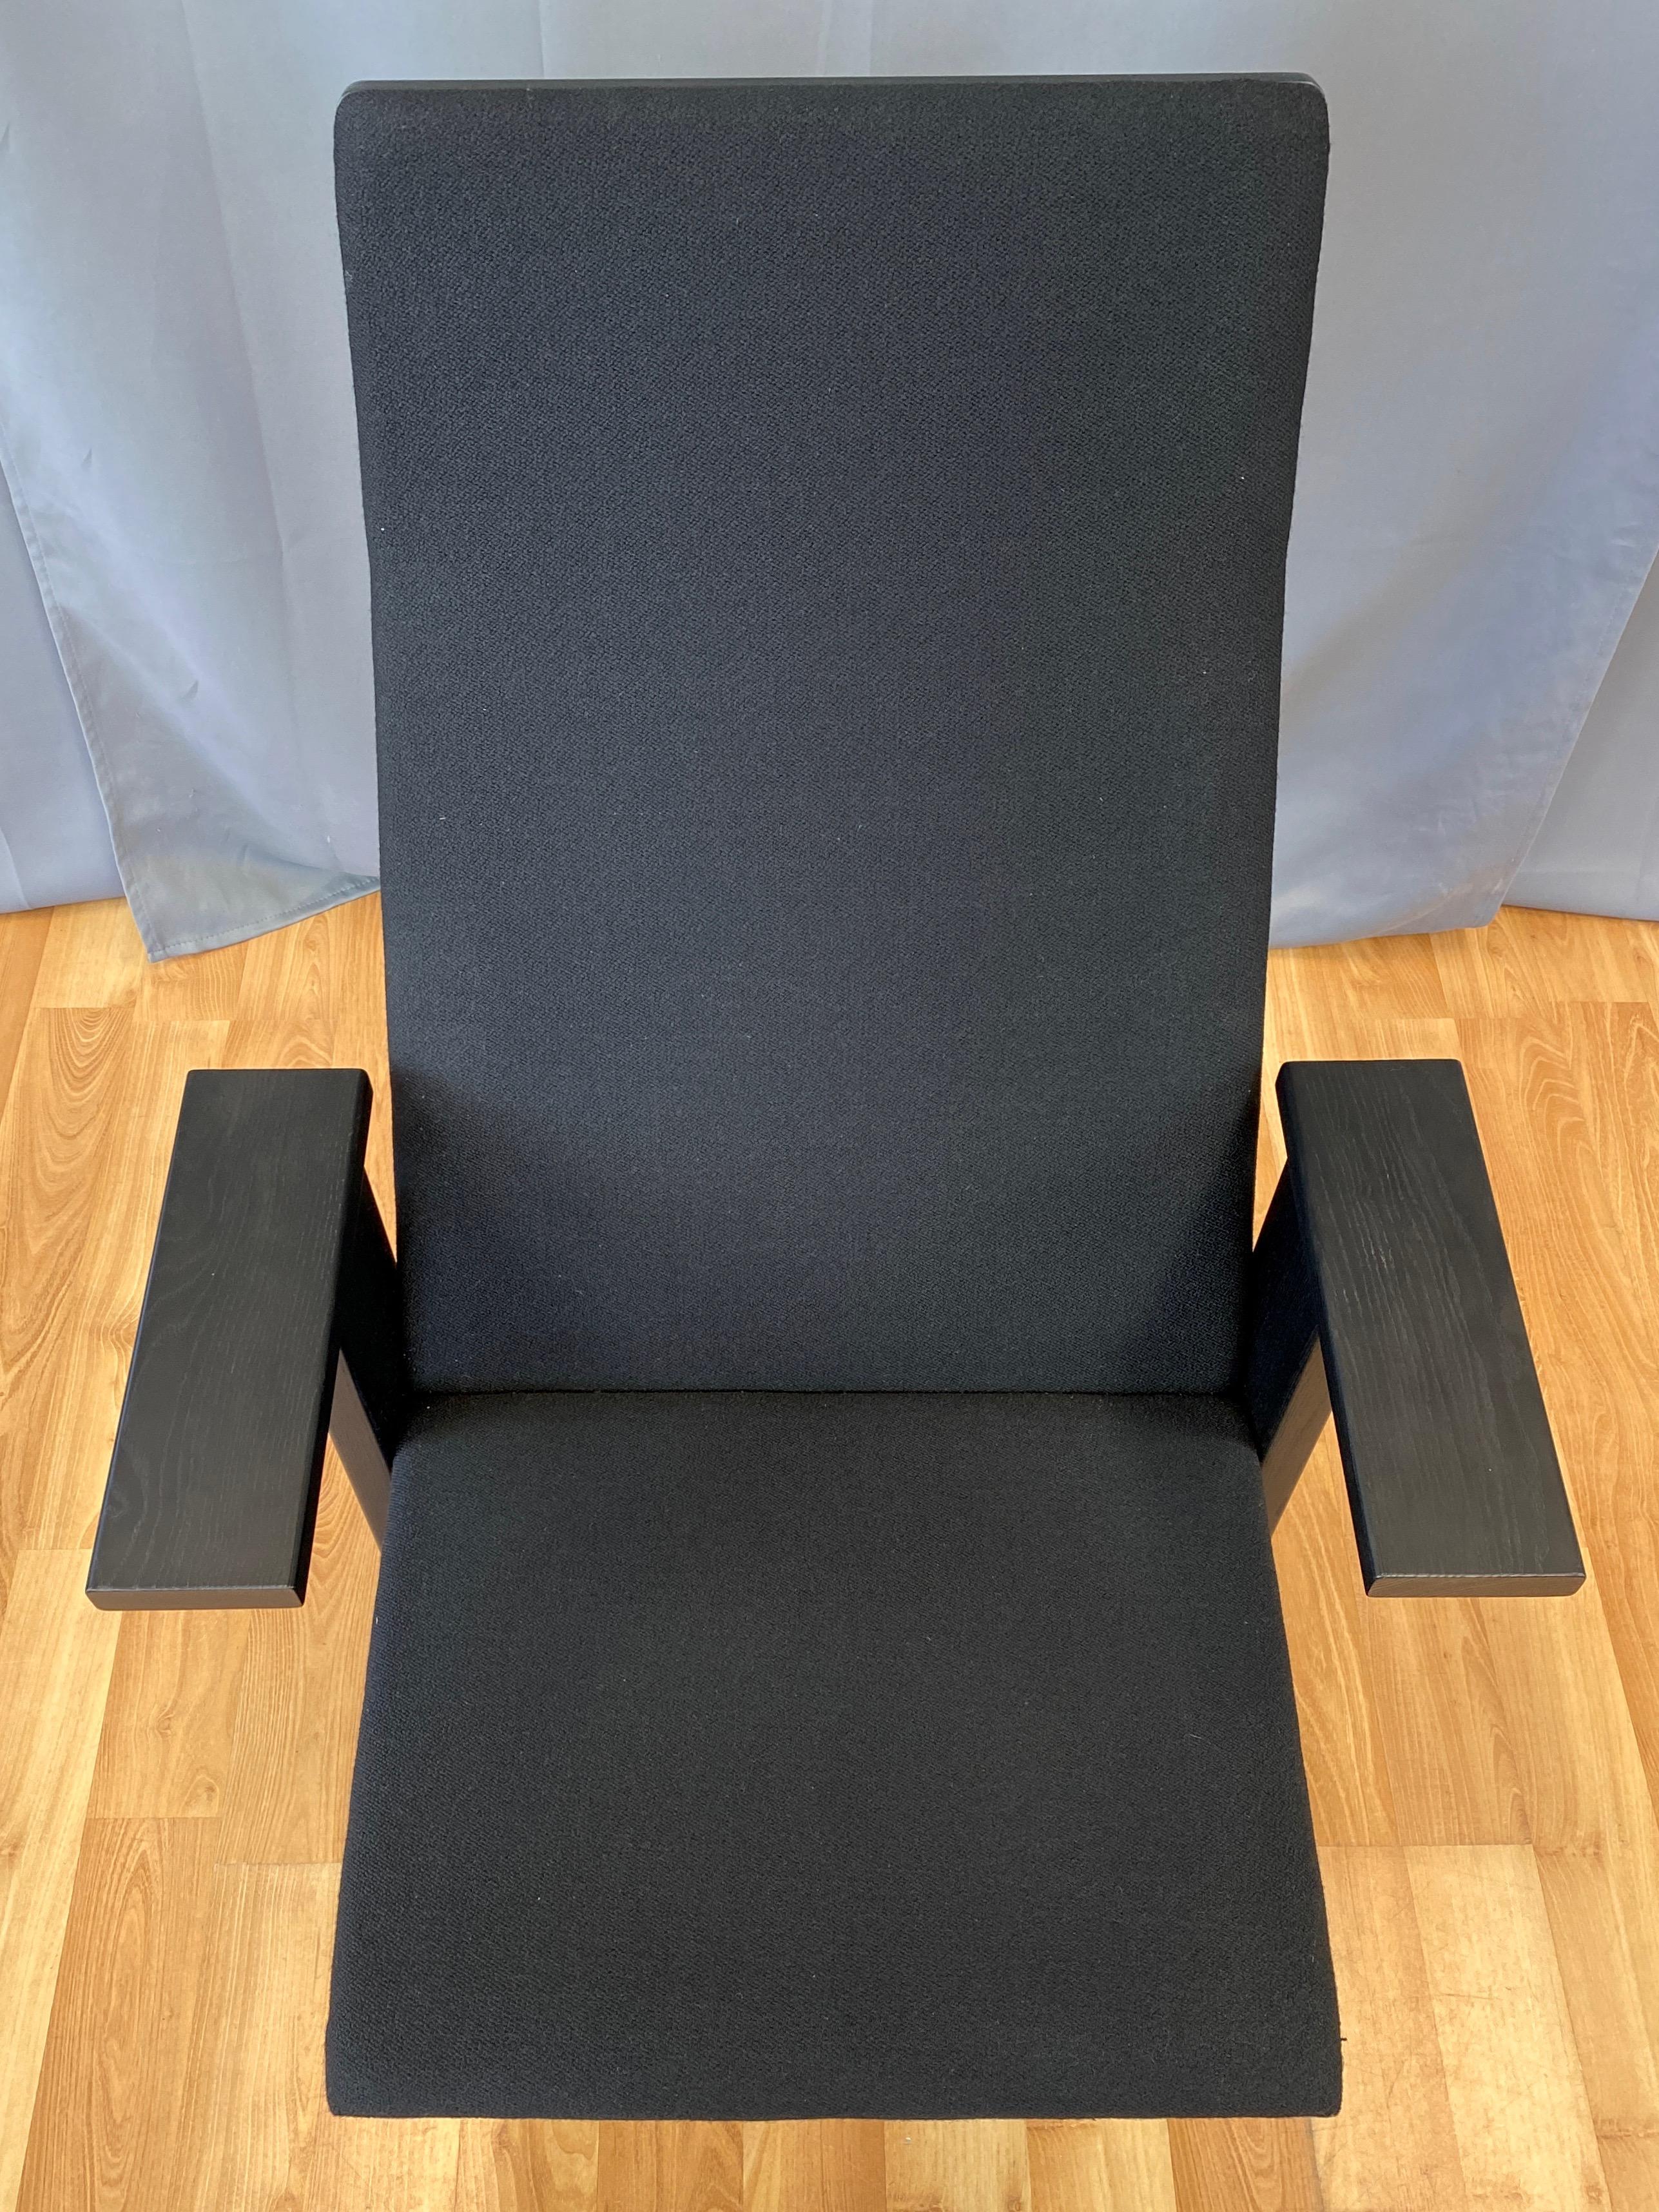 Fabric Ronan & Erwan Bouroullec for Mattiazzi Black Quindici Lounge Chair, 2018 For Sale